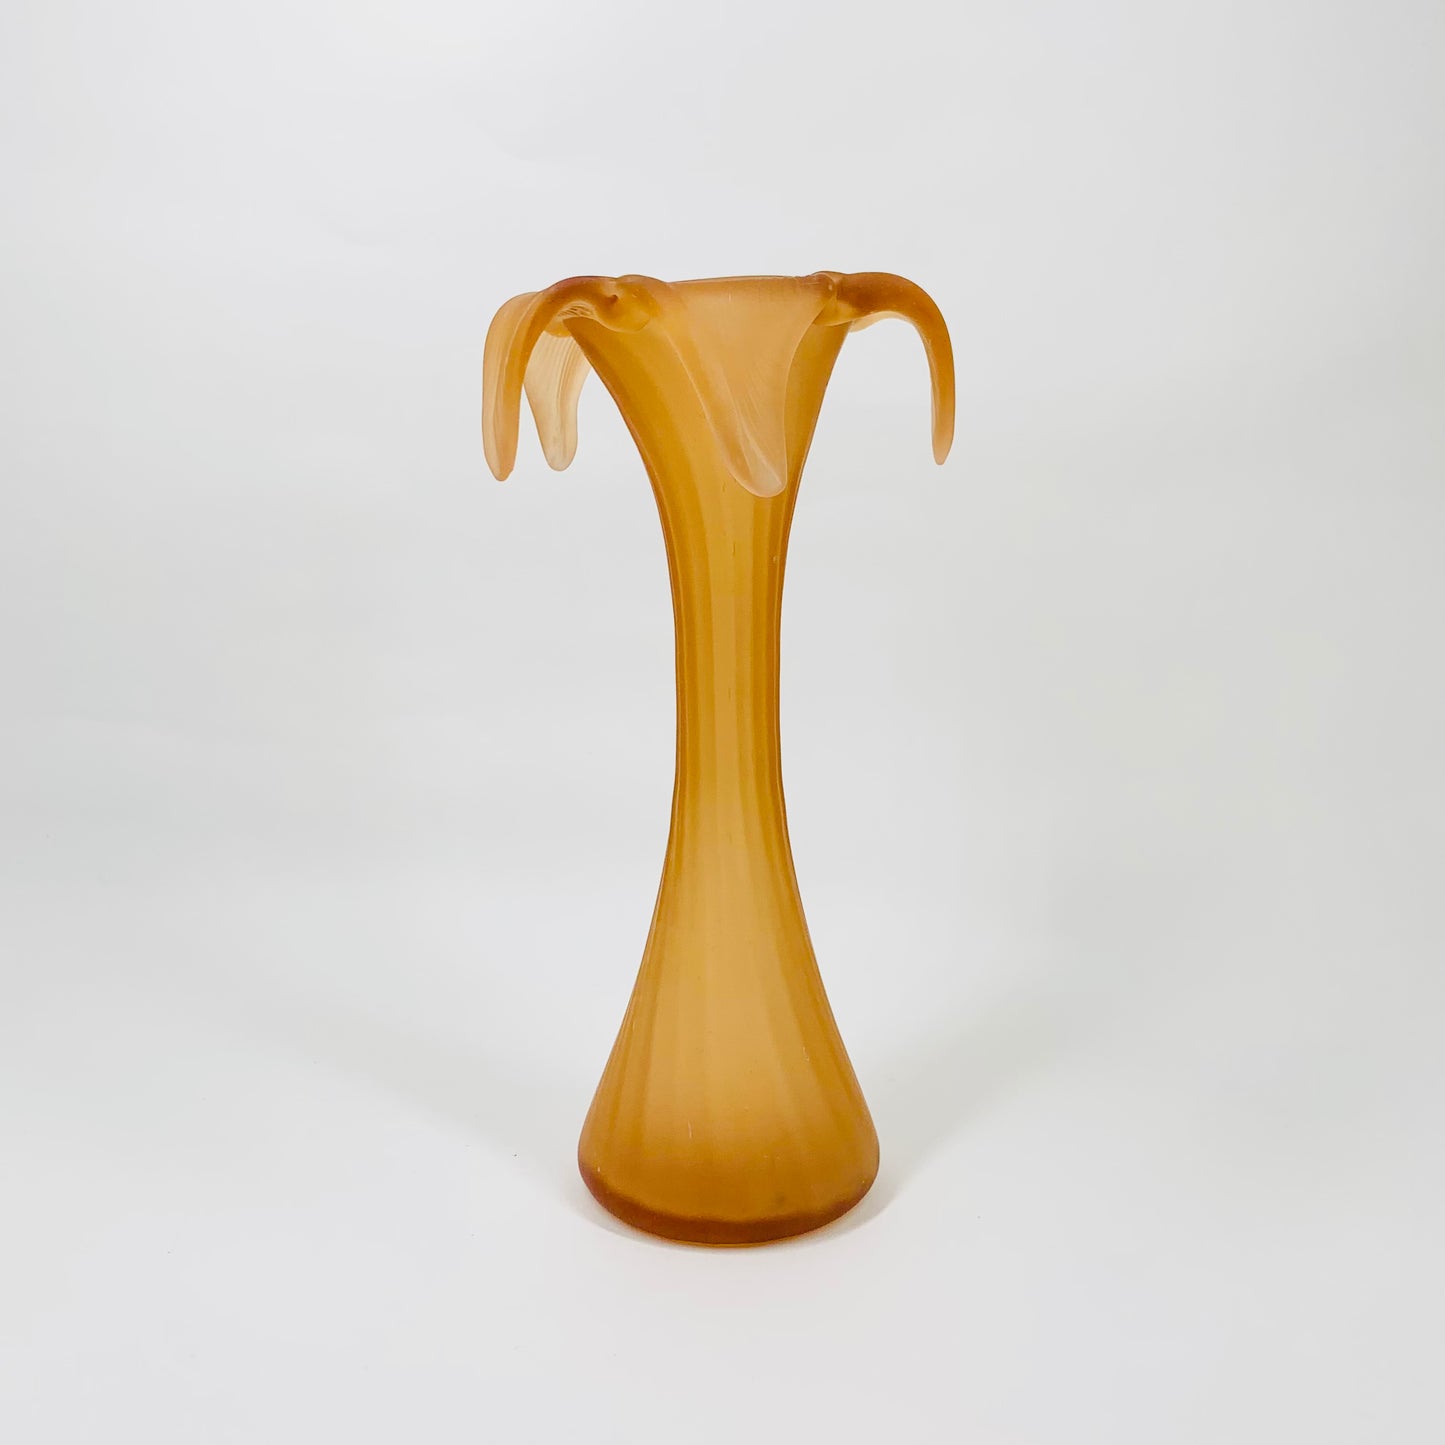 Extremely rare antique Art Nouveau peach satin glass small palm vase